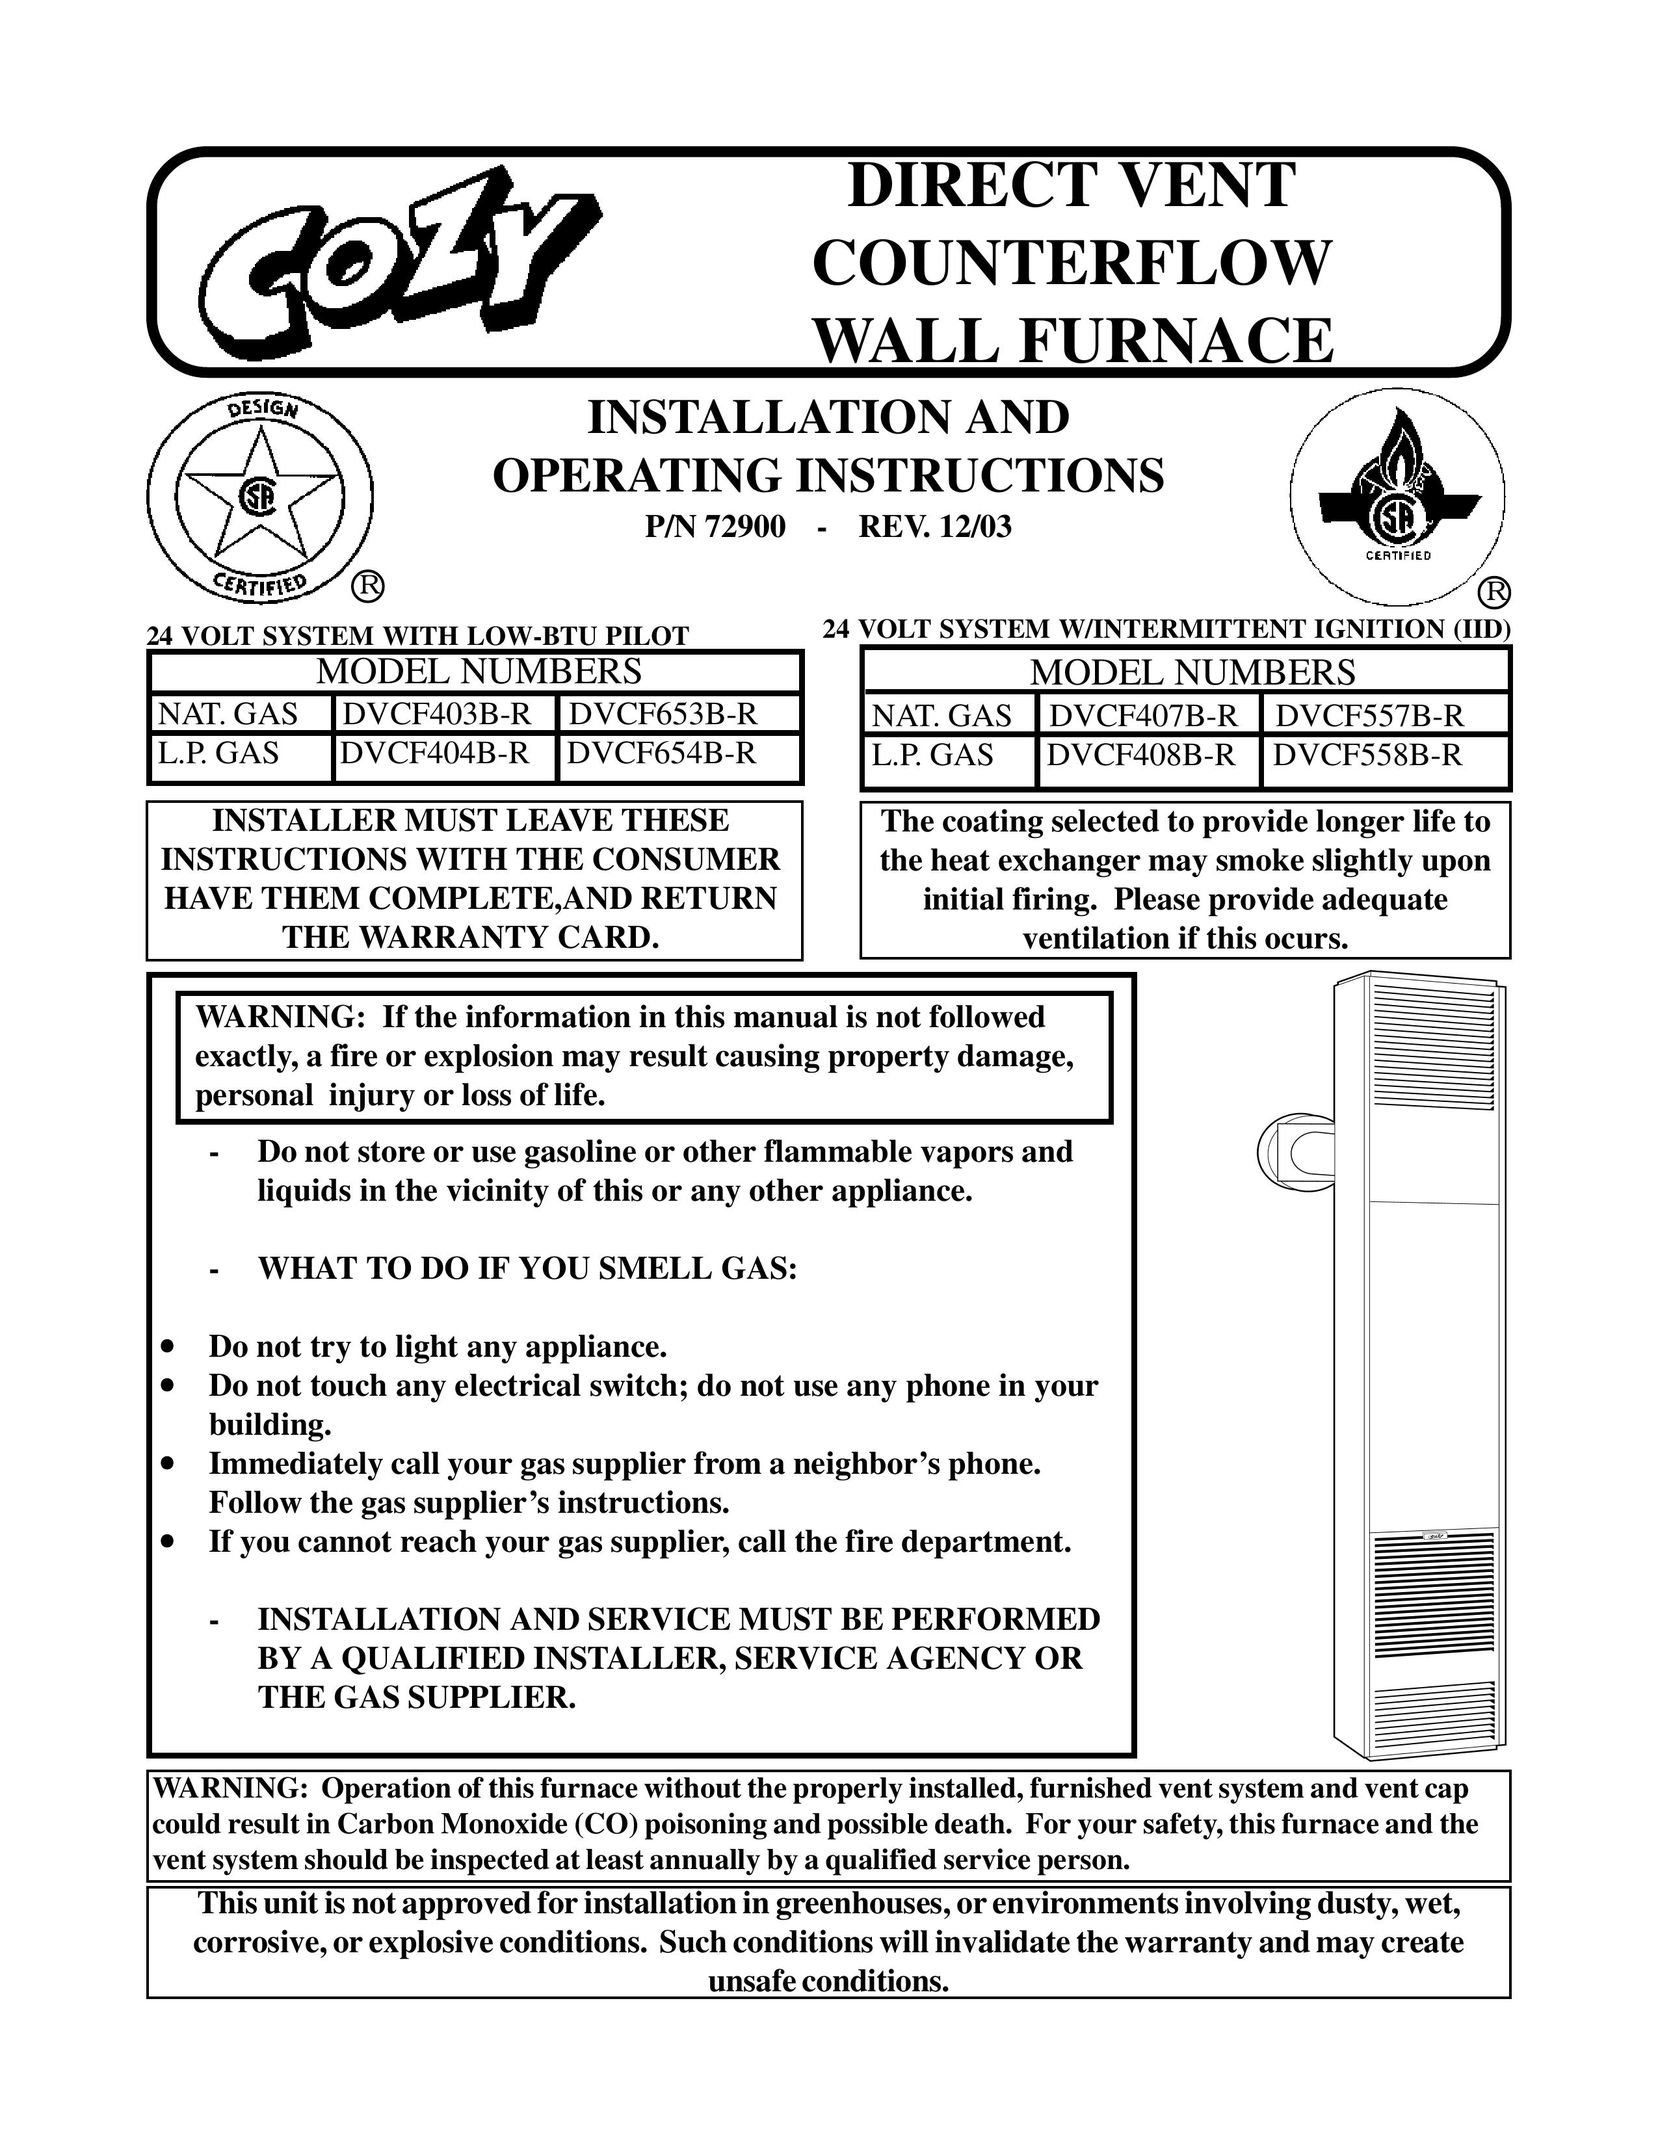 Louisville Tin and Stove DVCF557B-R Furnace User Manual